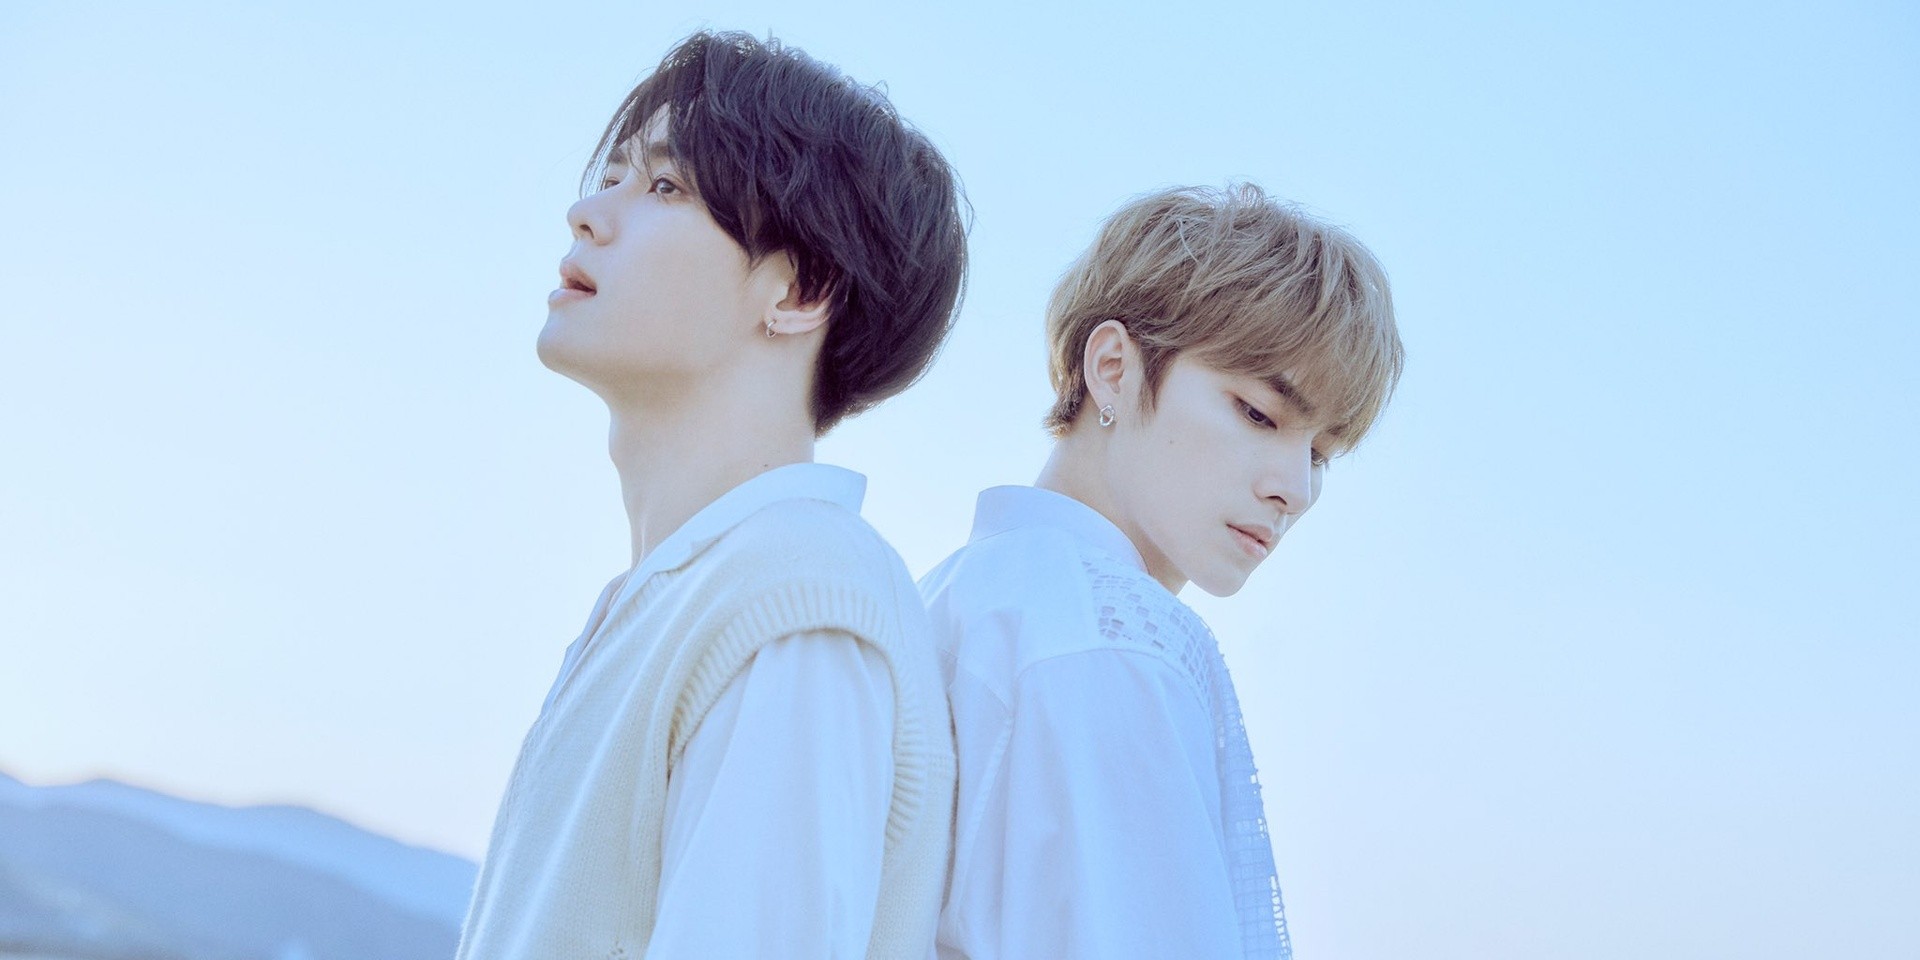 WayV's sub-unit KUN&XIAOJUN unveil their debut single 'Back To You' – watch